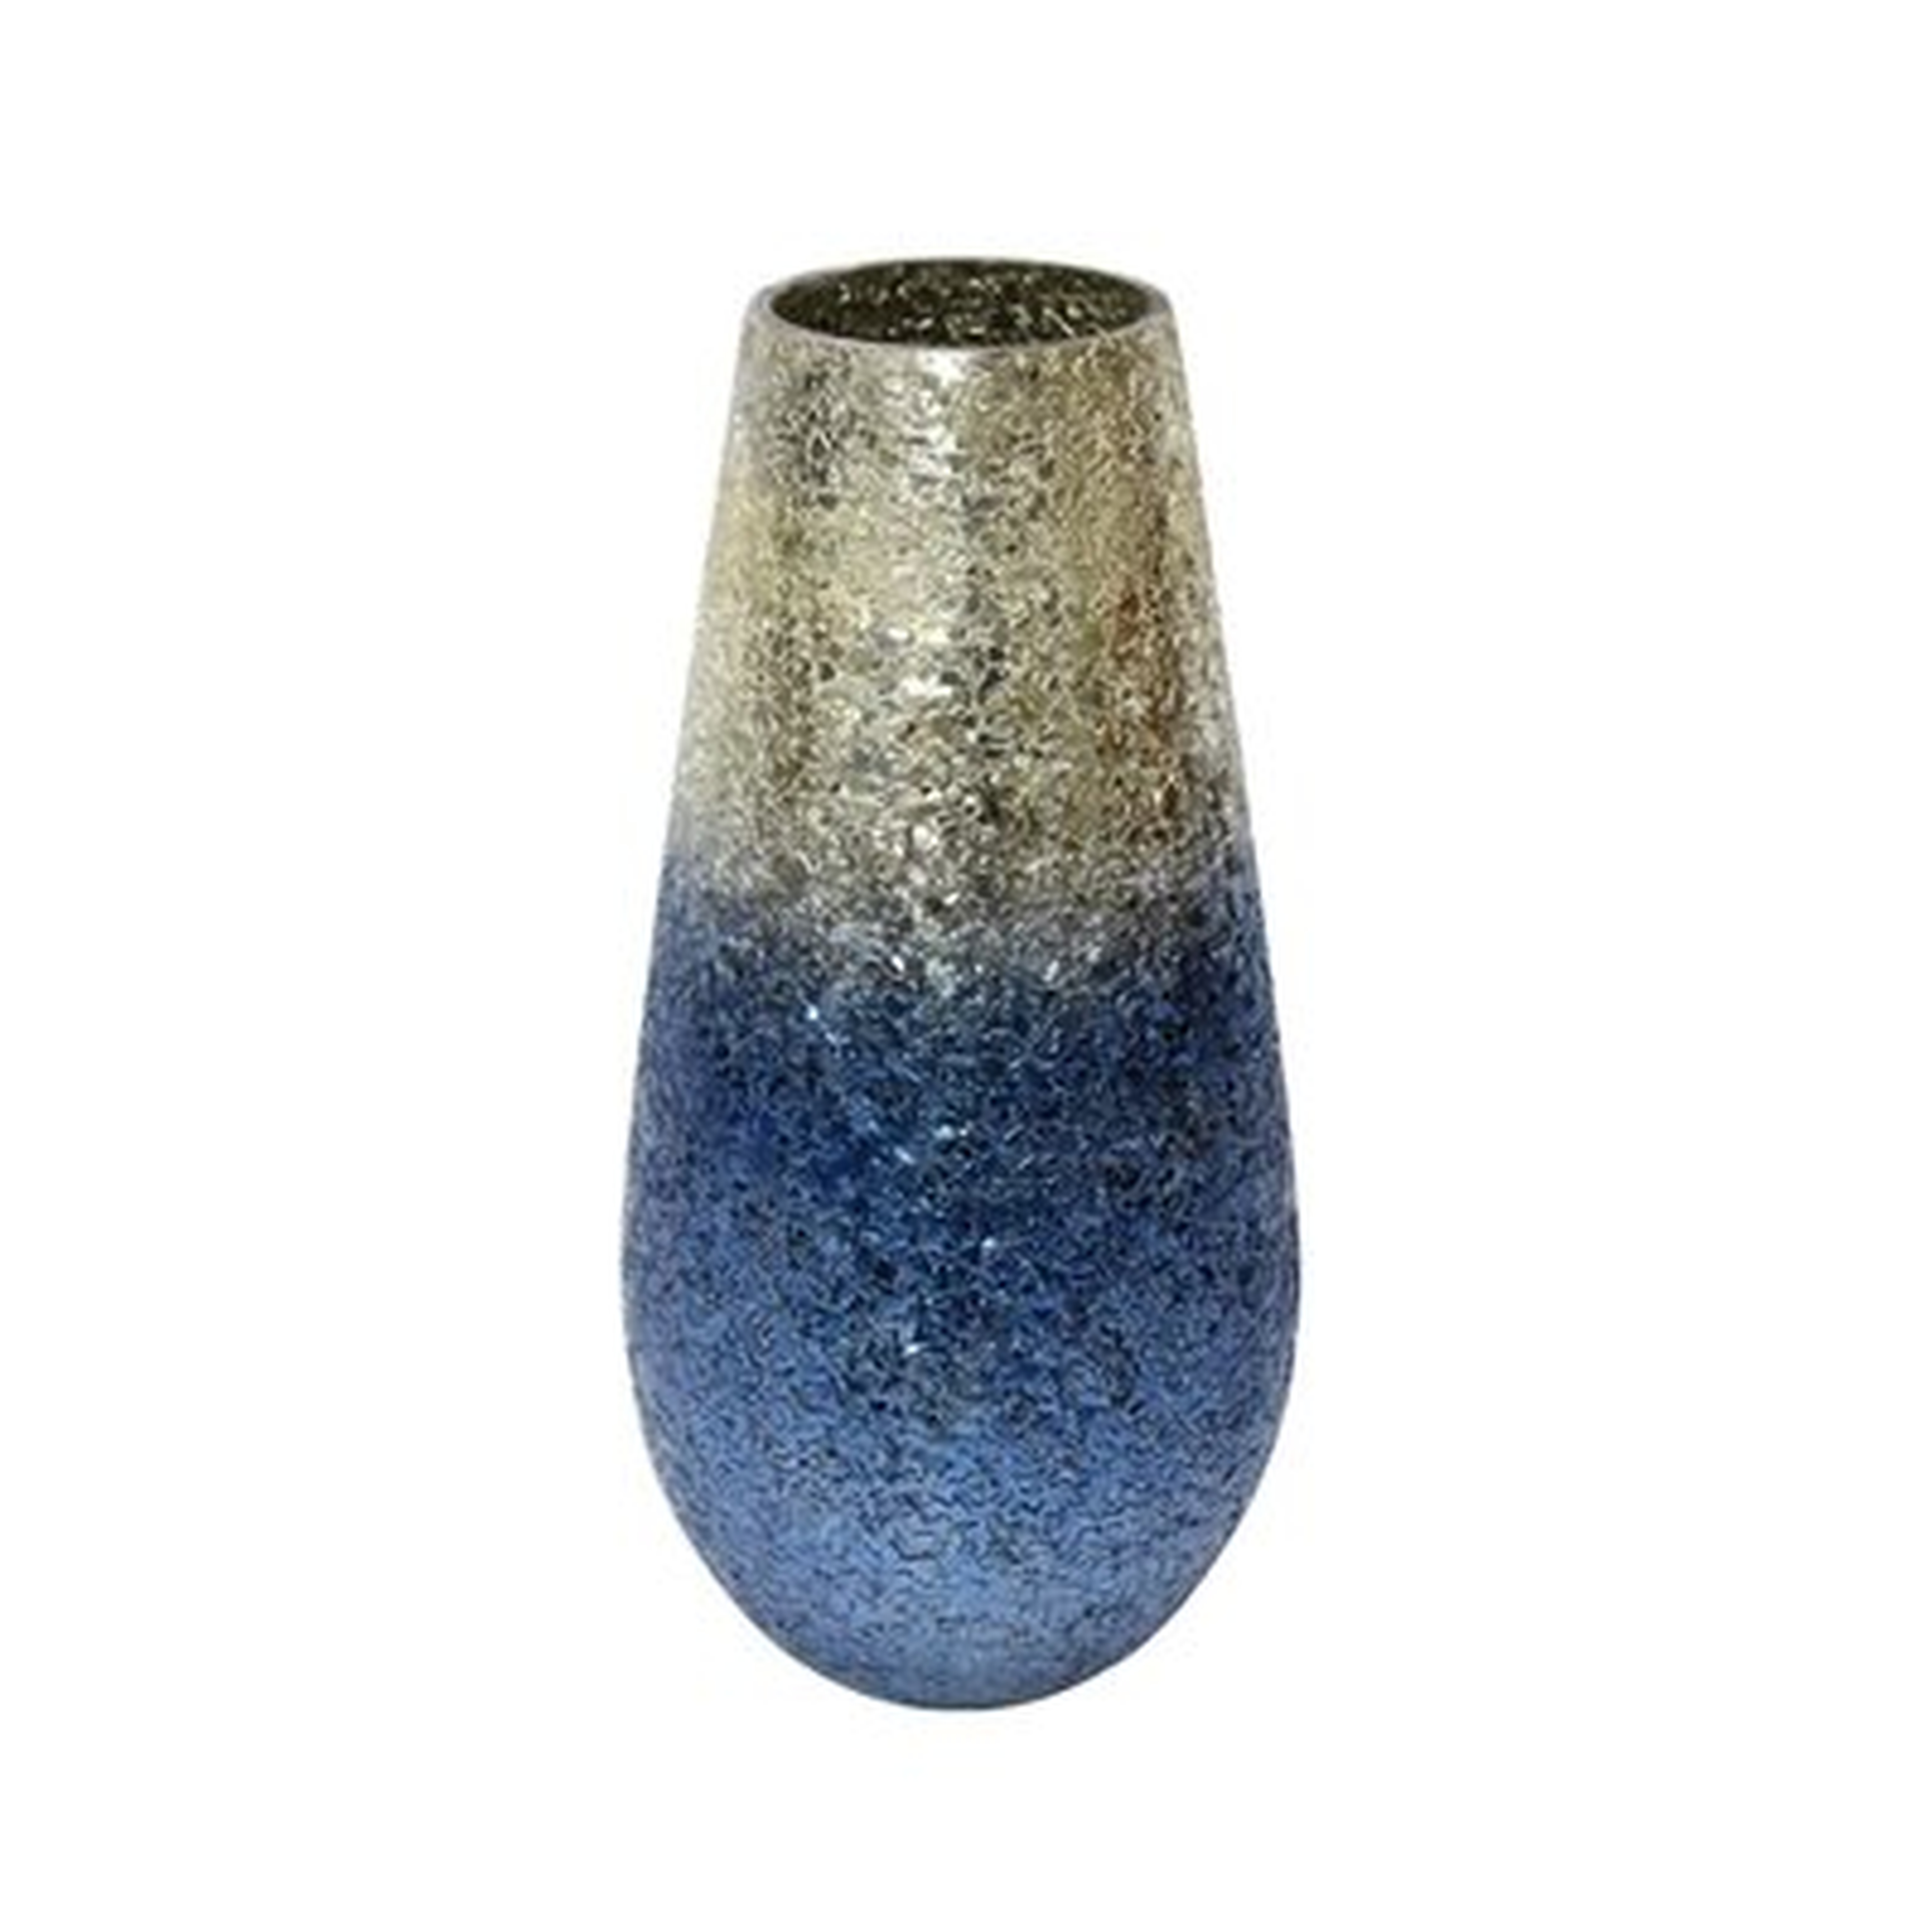 Pelicano Silver/Blue 12" Glass Table Vase - Wayfair